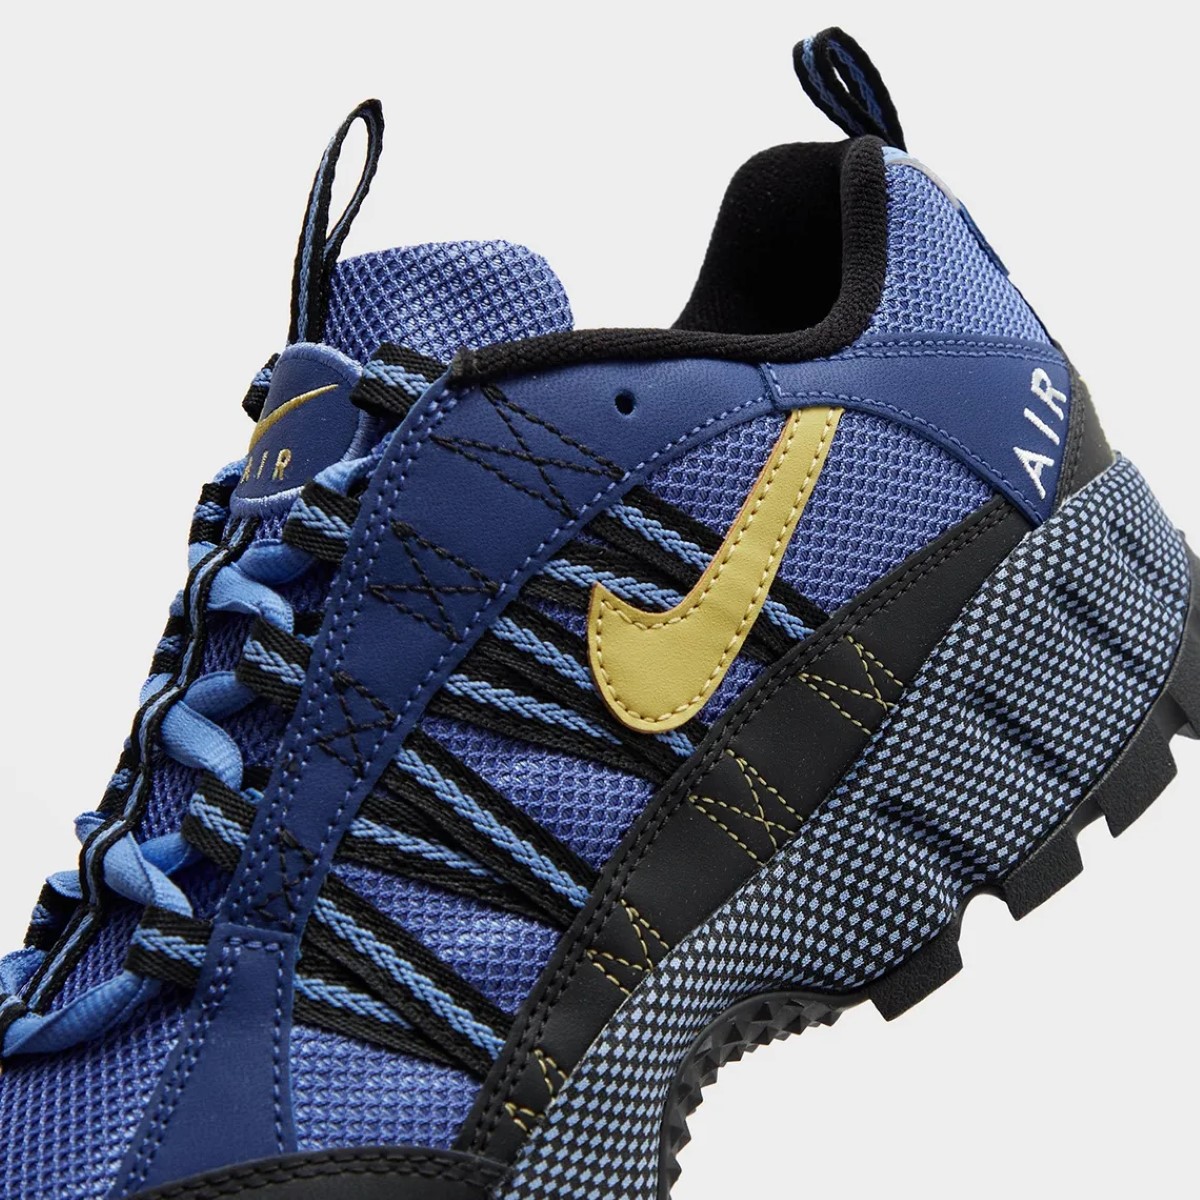 Nike Air Humara dazzles with polar blue and buff gold